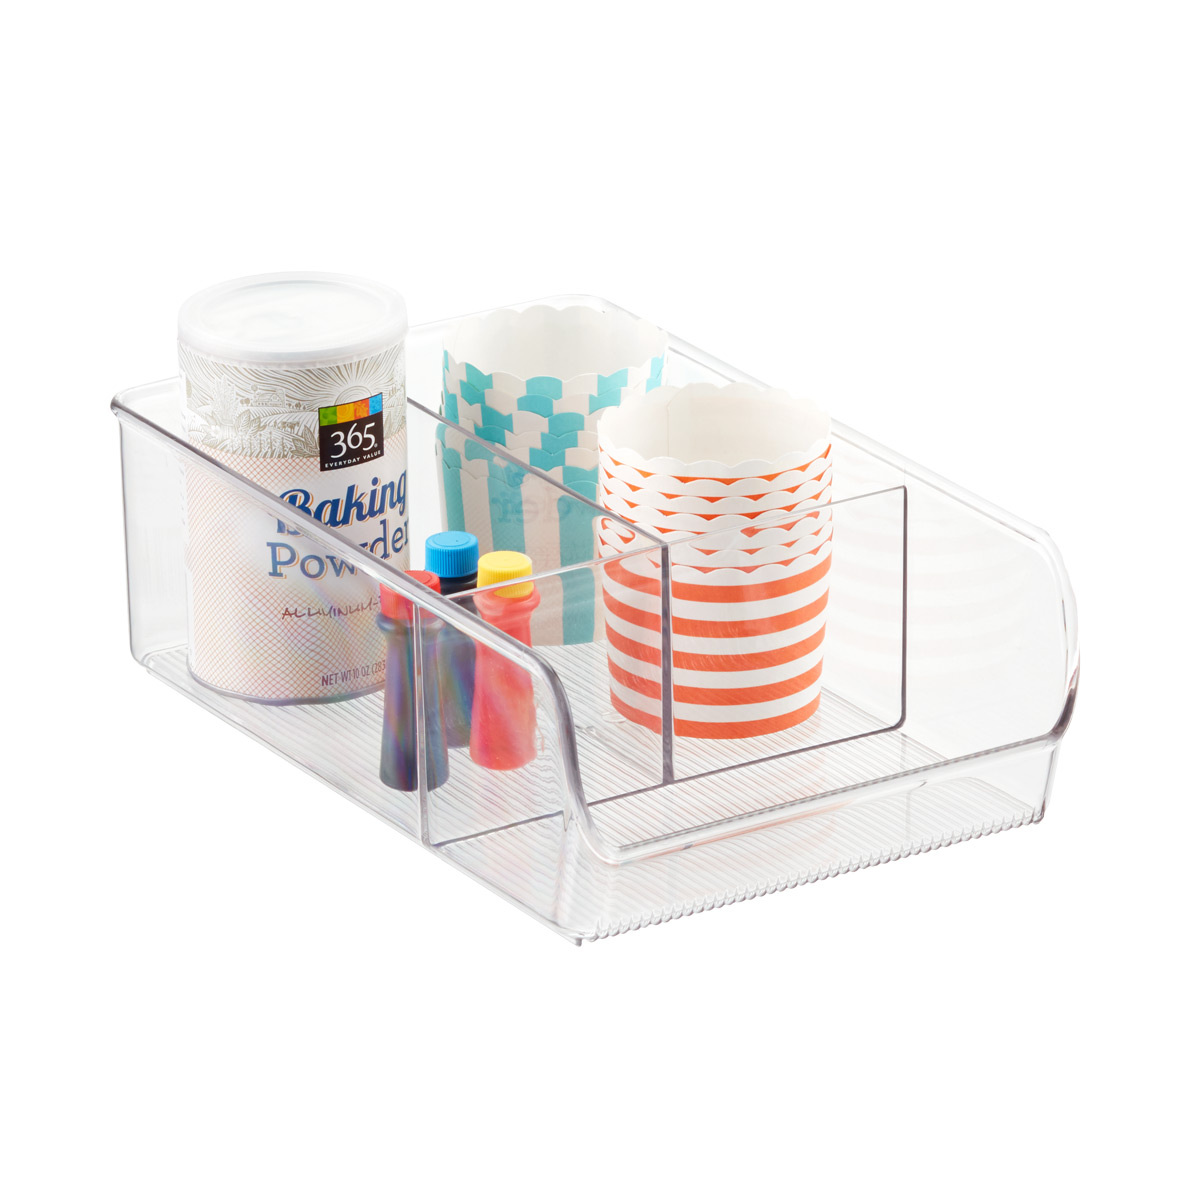 Mdesign Linus Plastic Kitchen/pantry Food Storage Cabinet